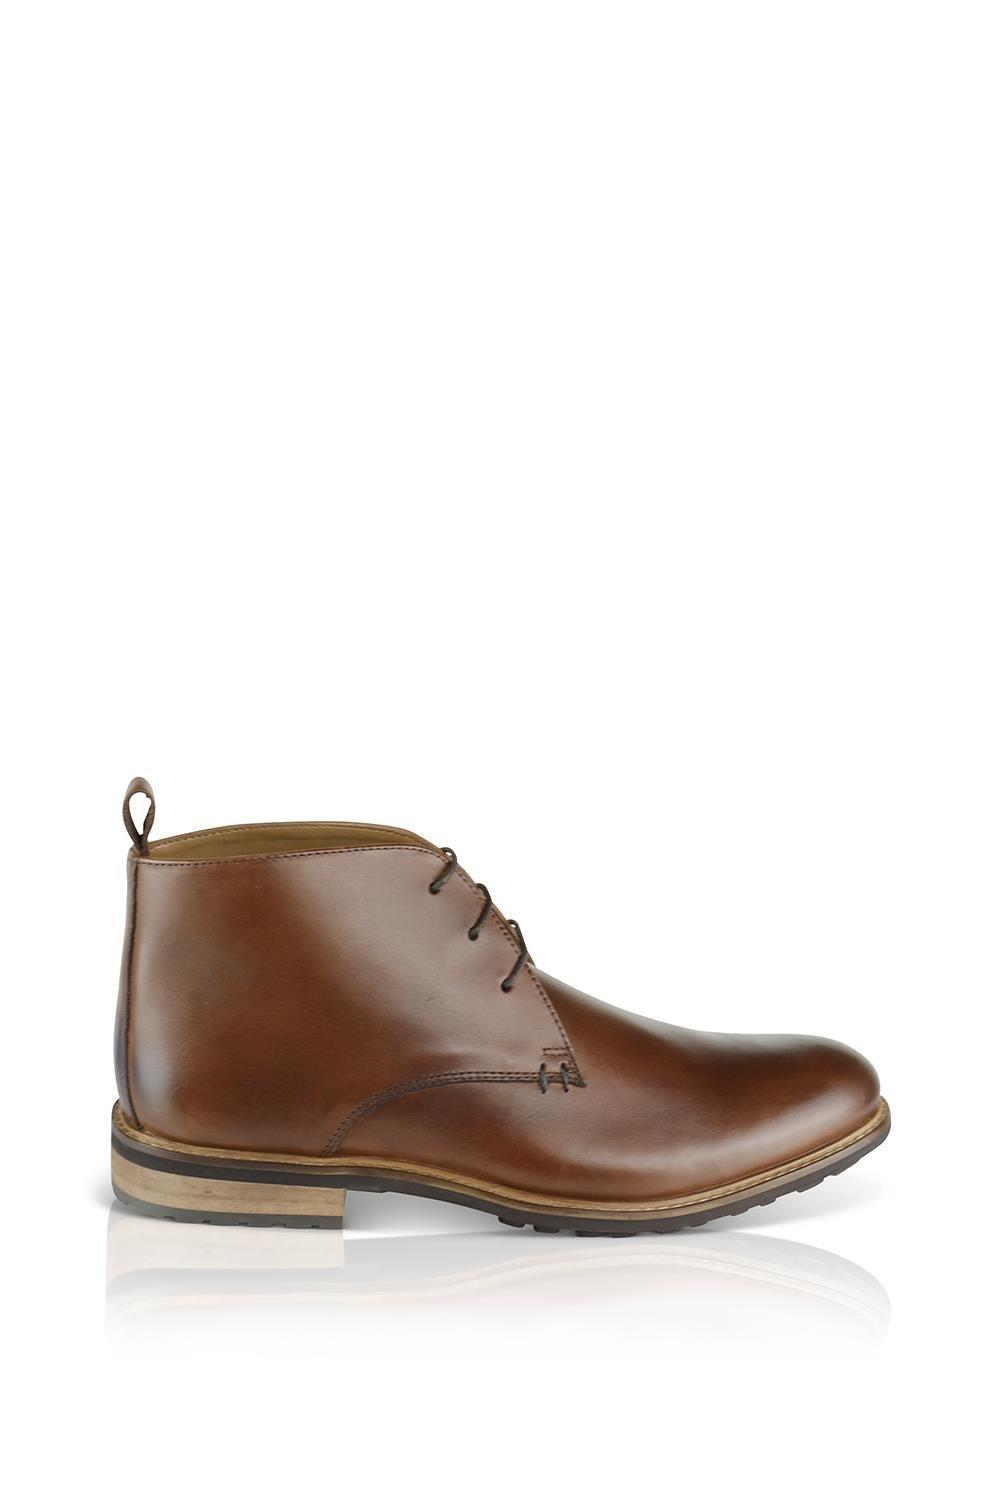 Кожаные ботинки чукка Ludgate Silver Street London, коричневый утепленные ботинки чукка next коричневый